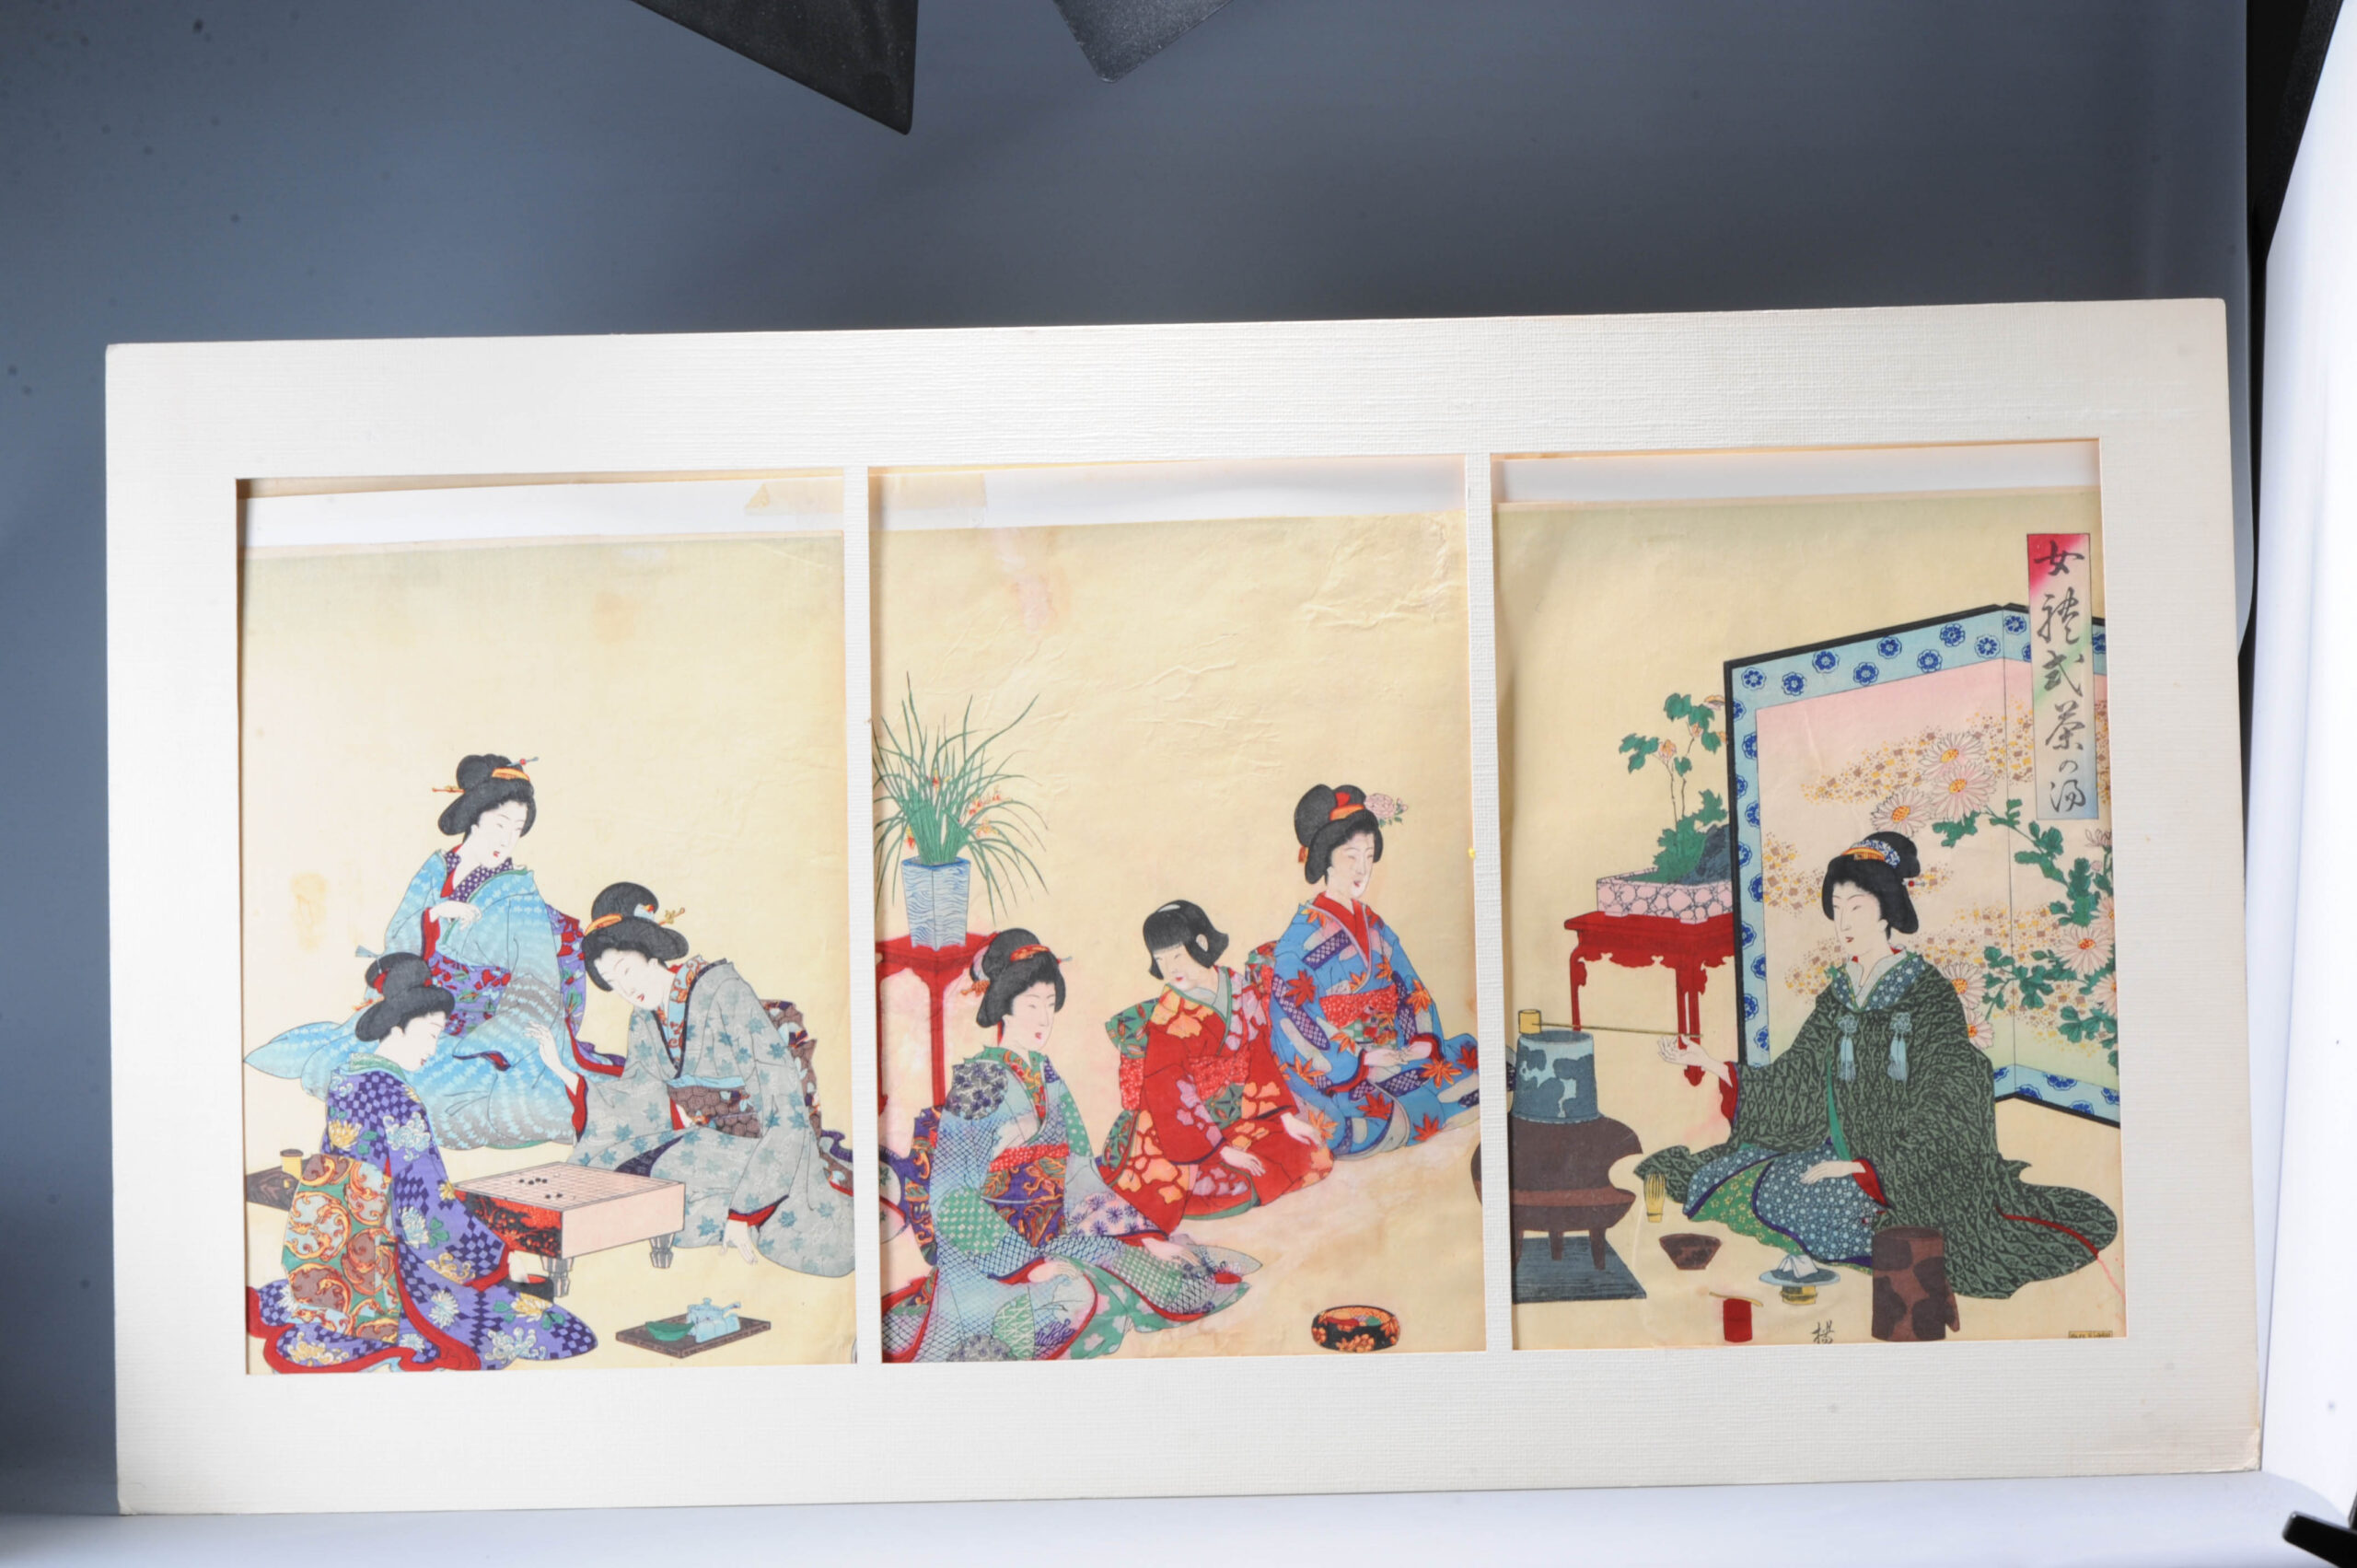 Japanese Wood Block Print Artist  Tea Ceremony and Playing Go  by Chikanobu (1838 – 1912) Ukiyo-e woodblock print master.